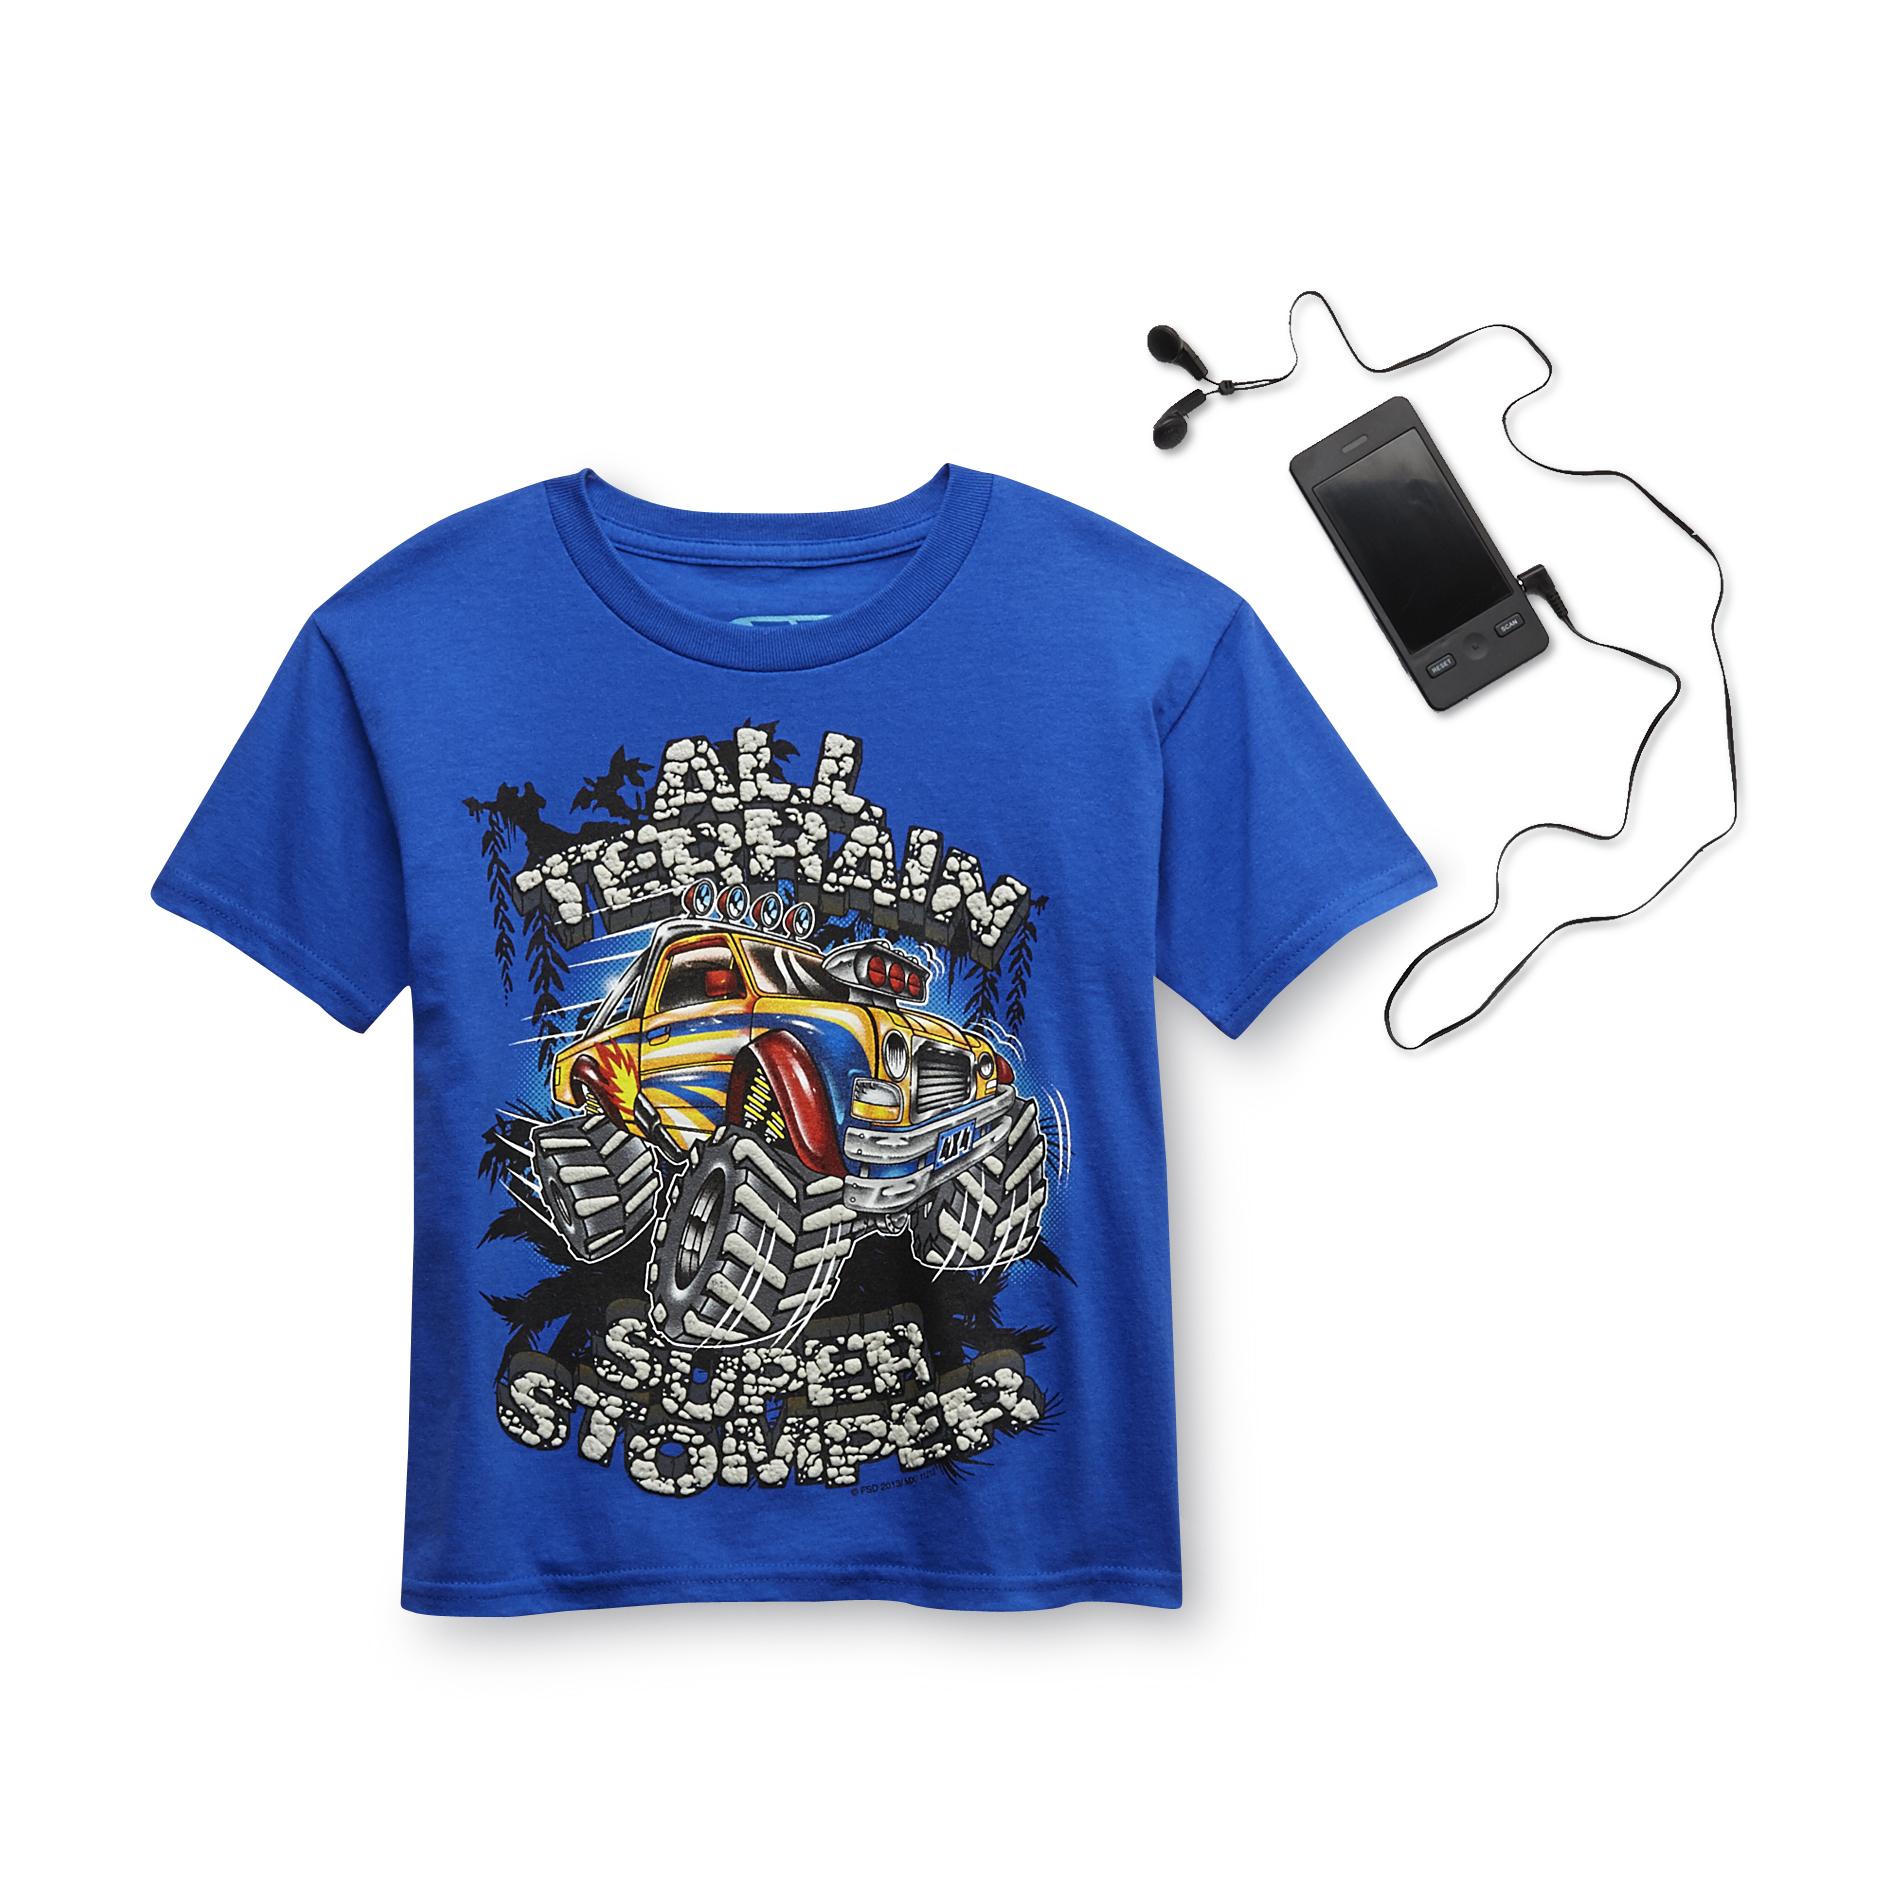 Rudeboyz Boy's Graphic T-Shirt, Radio & Ear Buds - Monster Truck